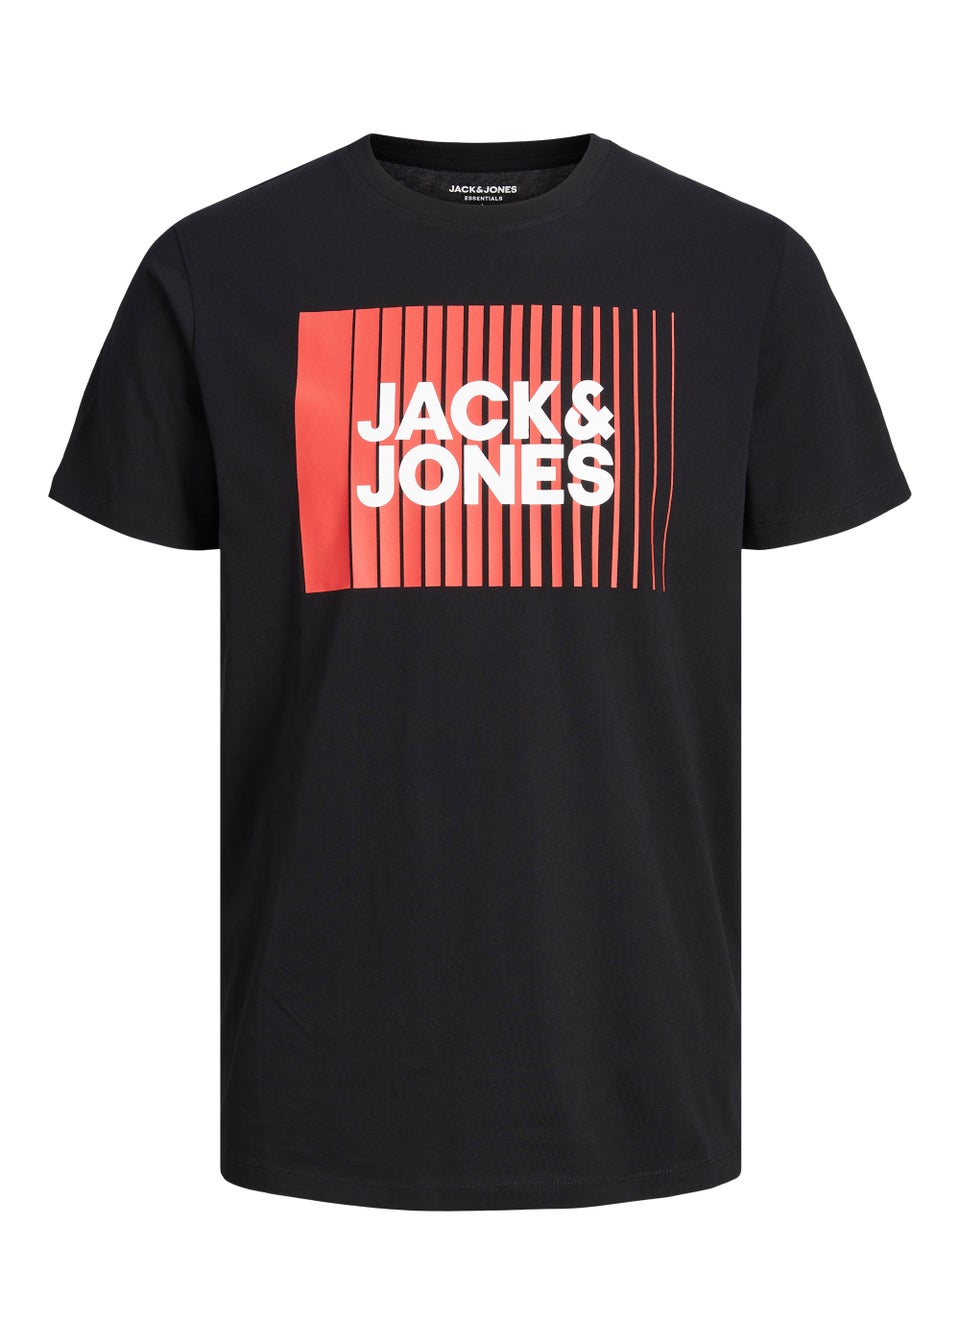 Jack & Jones Junior Black Logo T-Shirt (6-16yrs) - Matalan